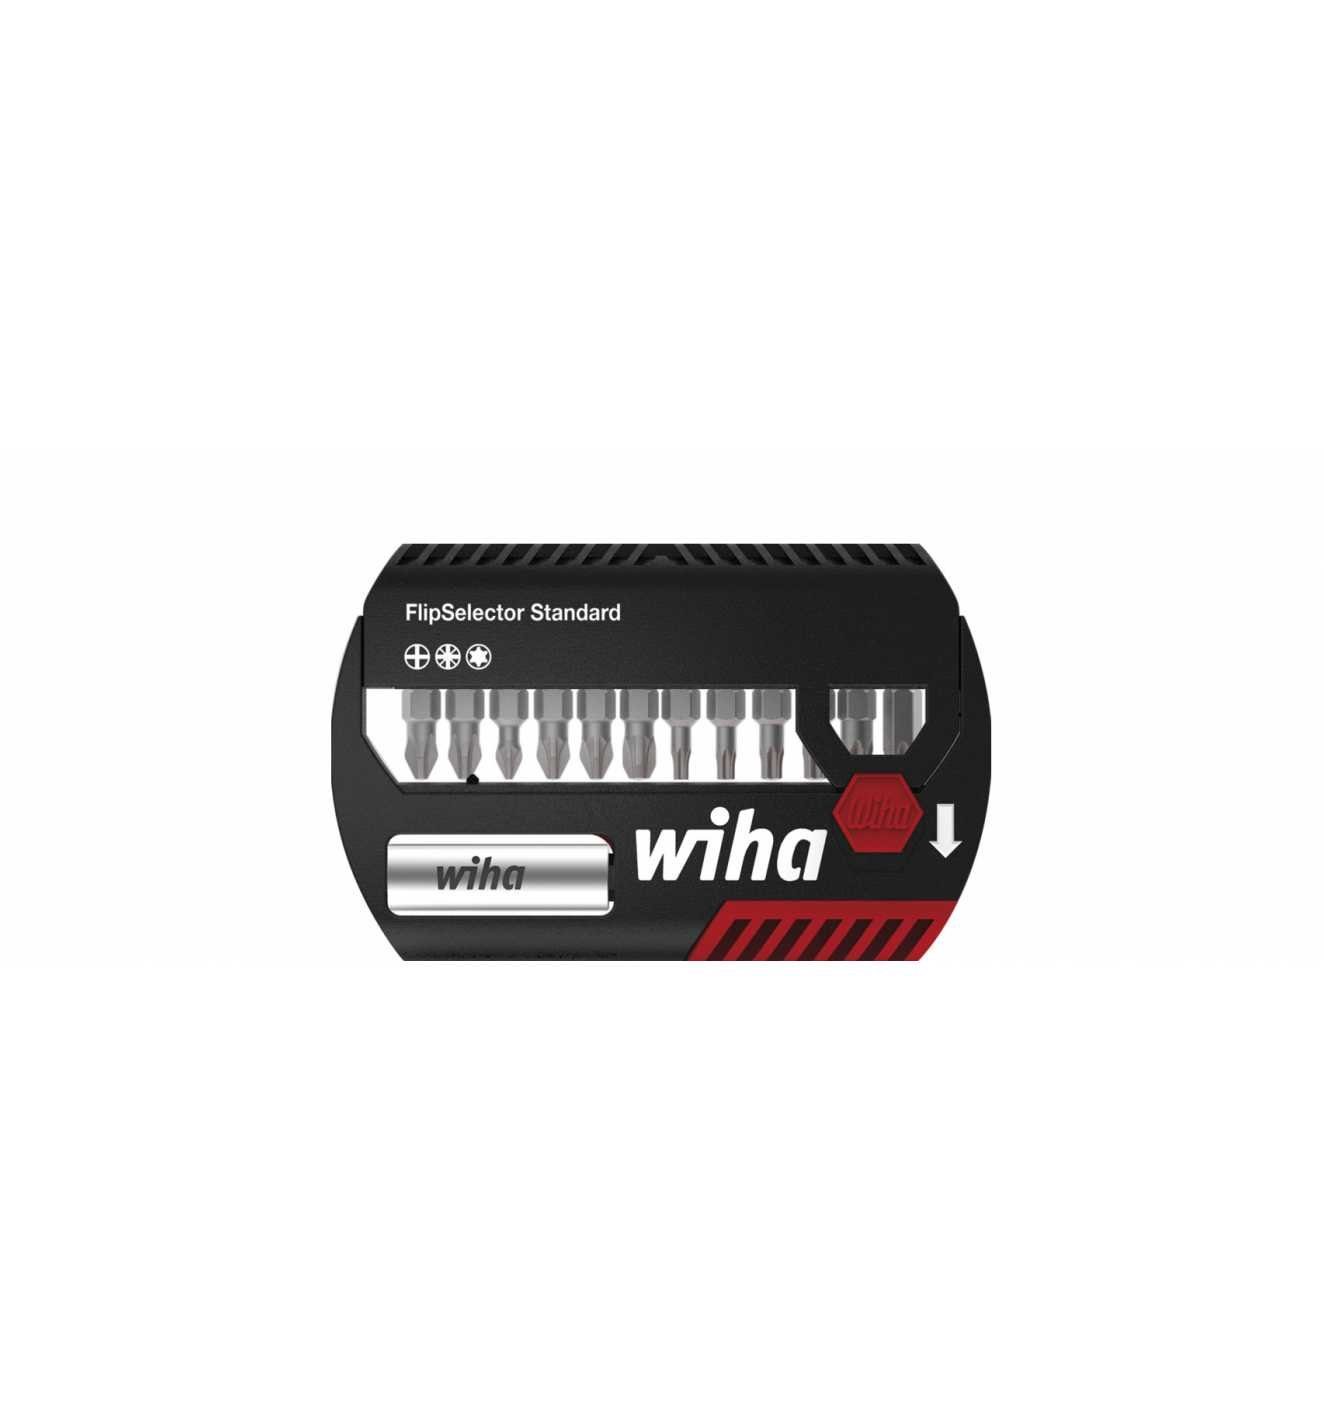 Wiha Bit-Set Bit Set FlipSelector Standard 25 mm, Phillips, Pozidriv, TORX 14-tlg. 1/4" C6,3 (39040) | Bits